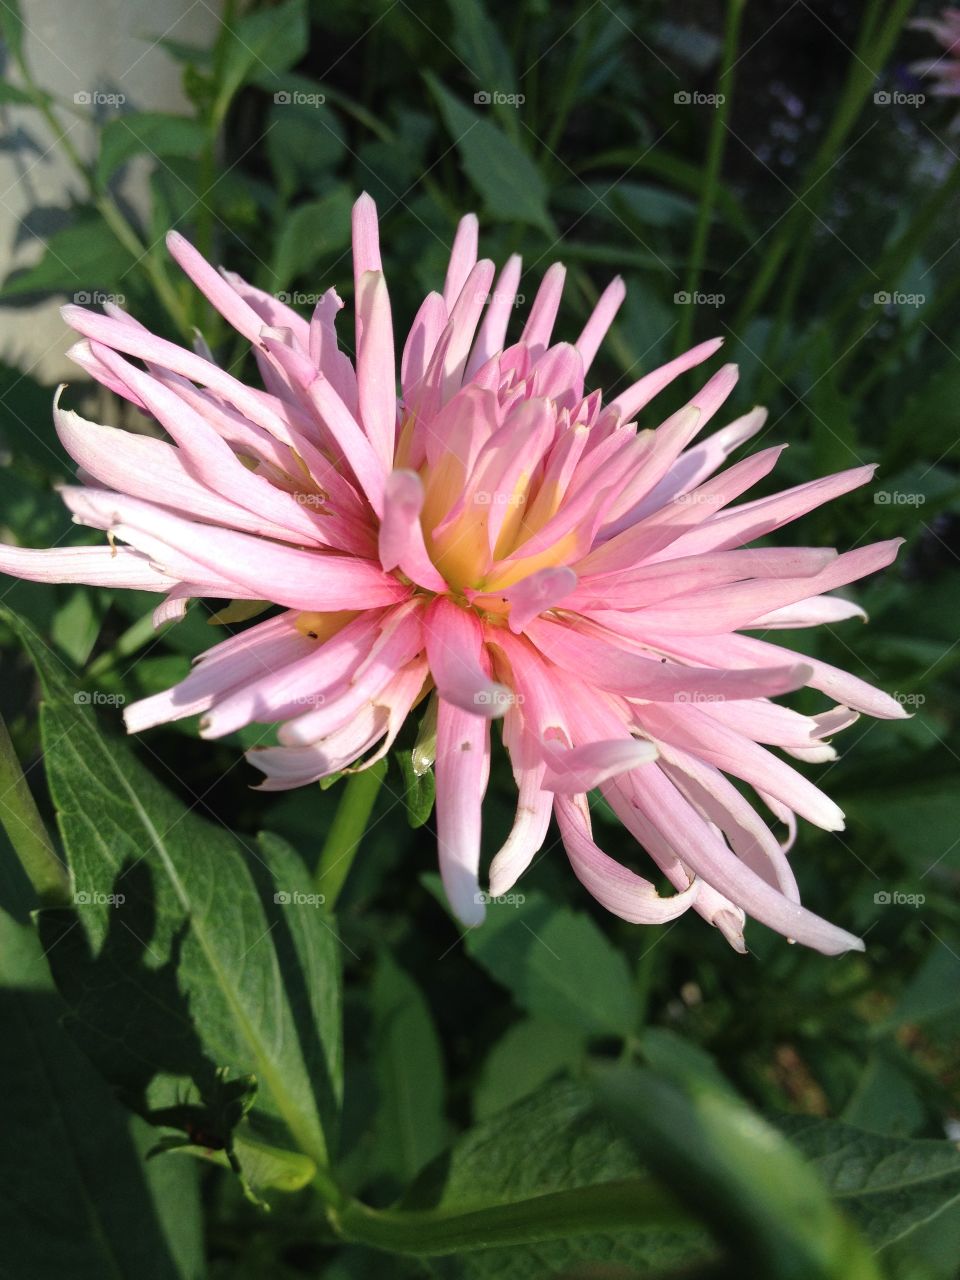 Pretty pink flower, chrysanthemum!